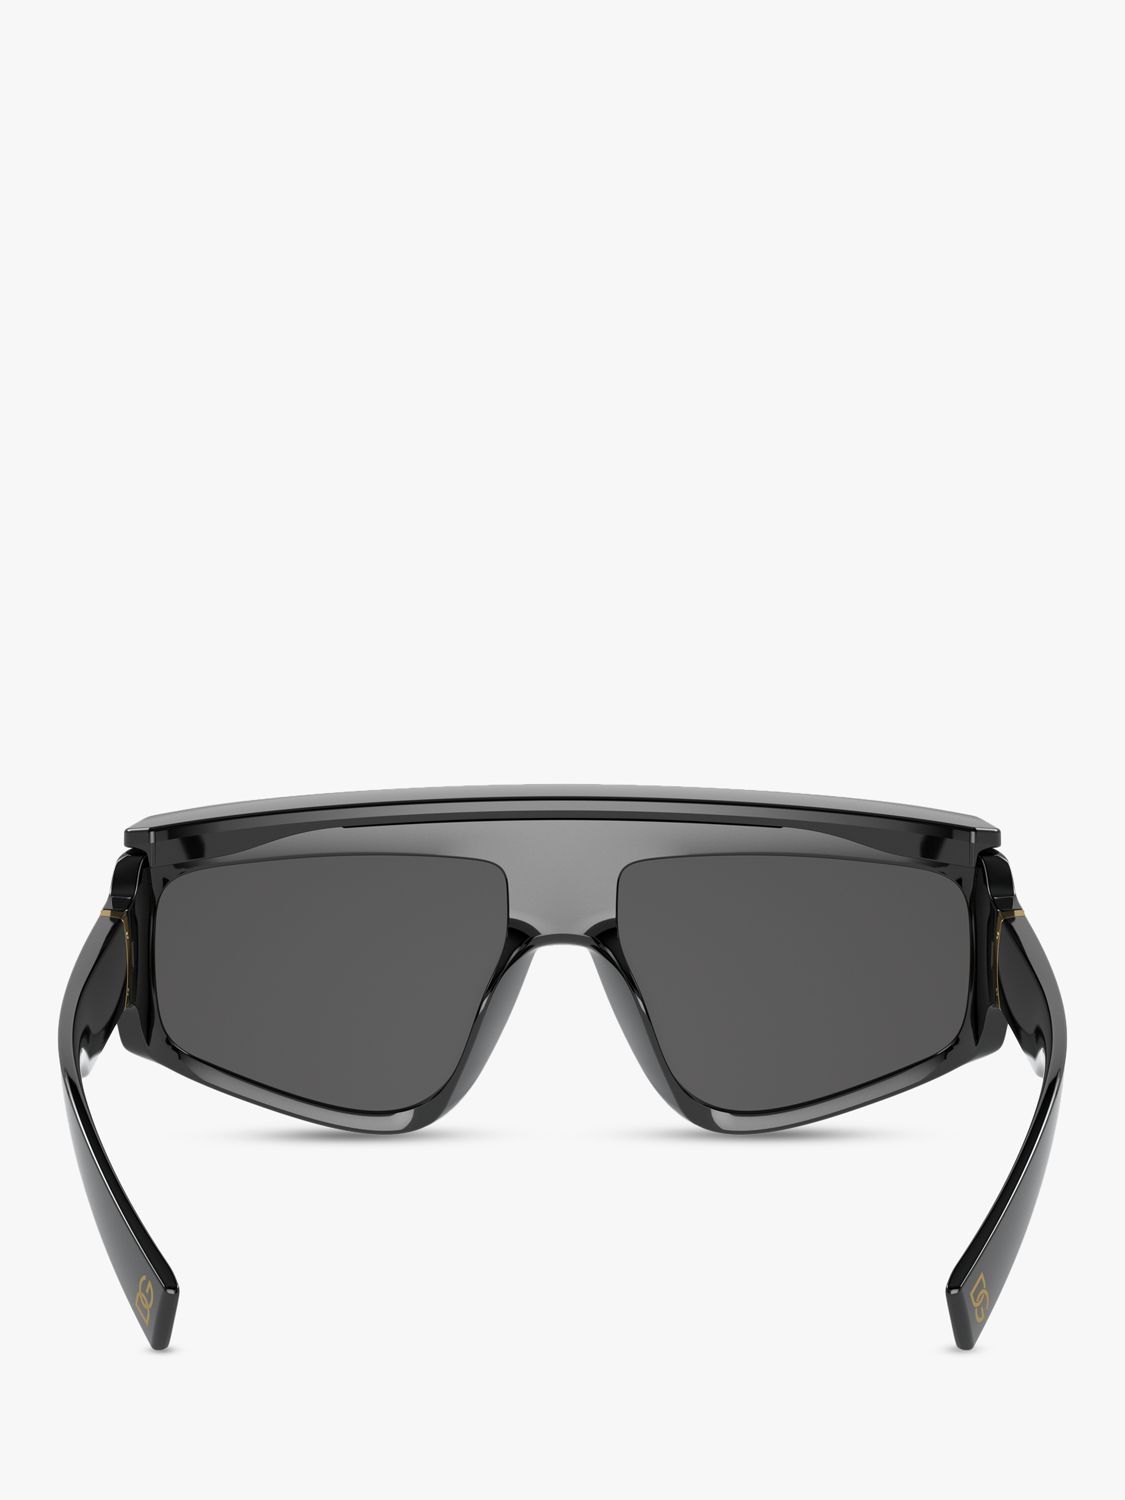 Dolce & Gabbana DG6177 Men's Rectangular Sunglasses, Black/Grey at John ...